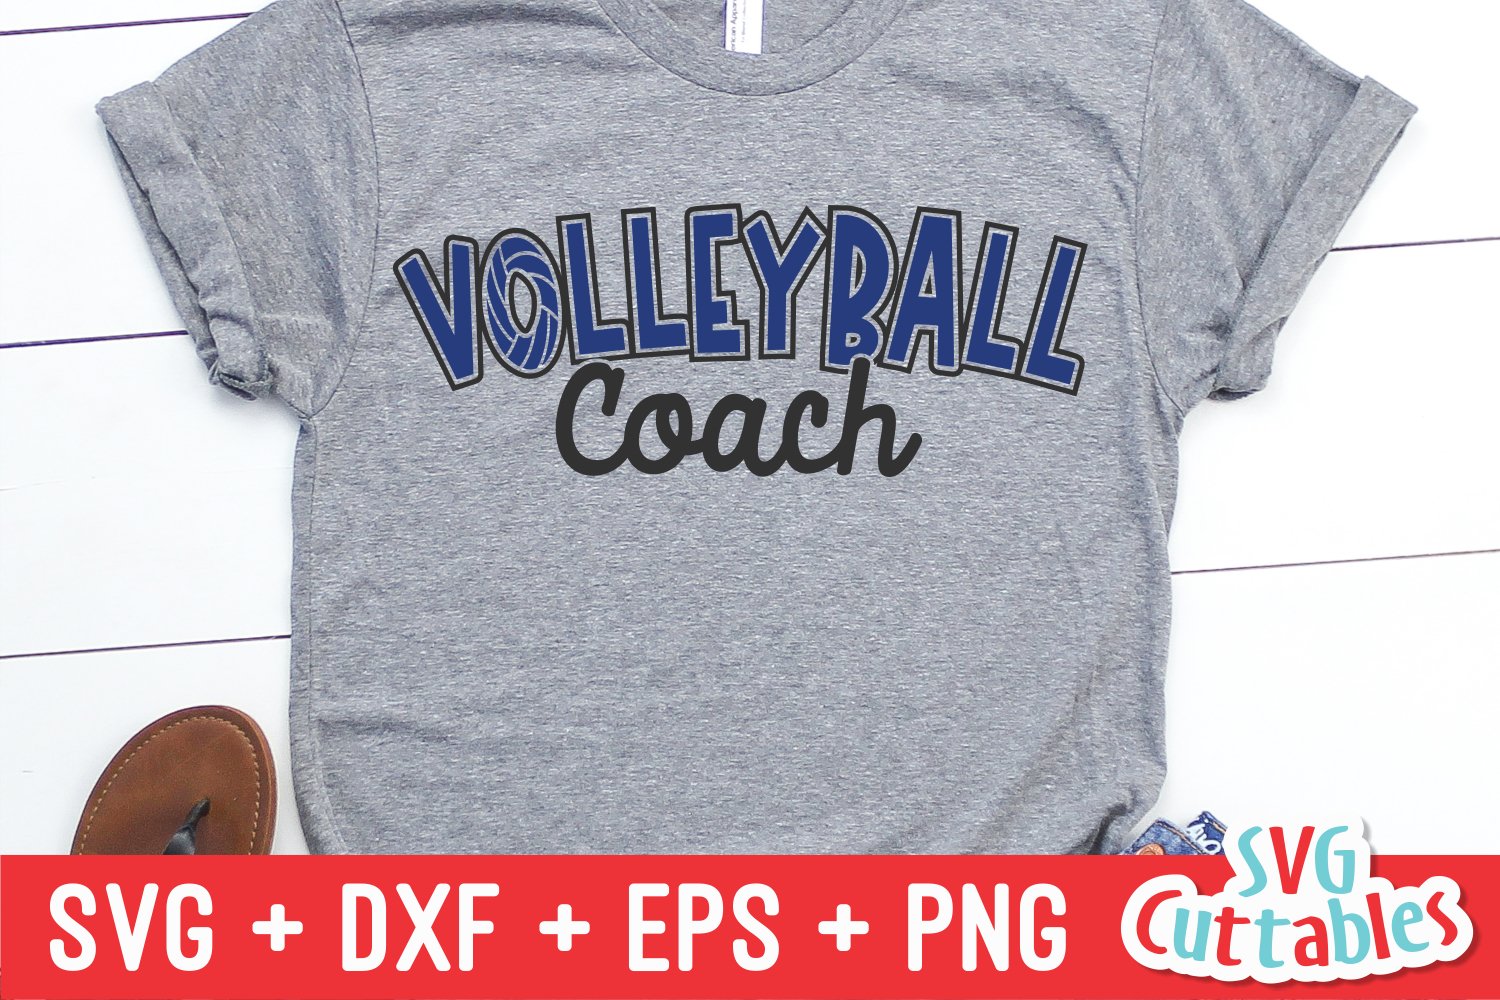 Volleyball Coach on t-shirt design.